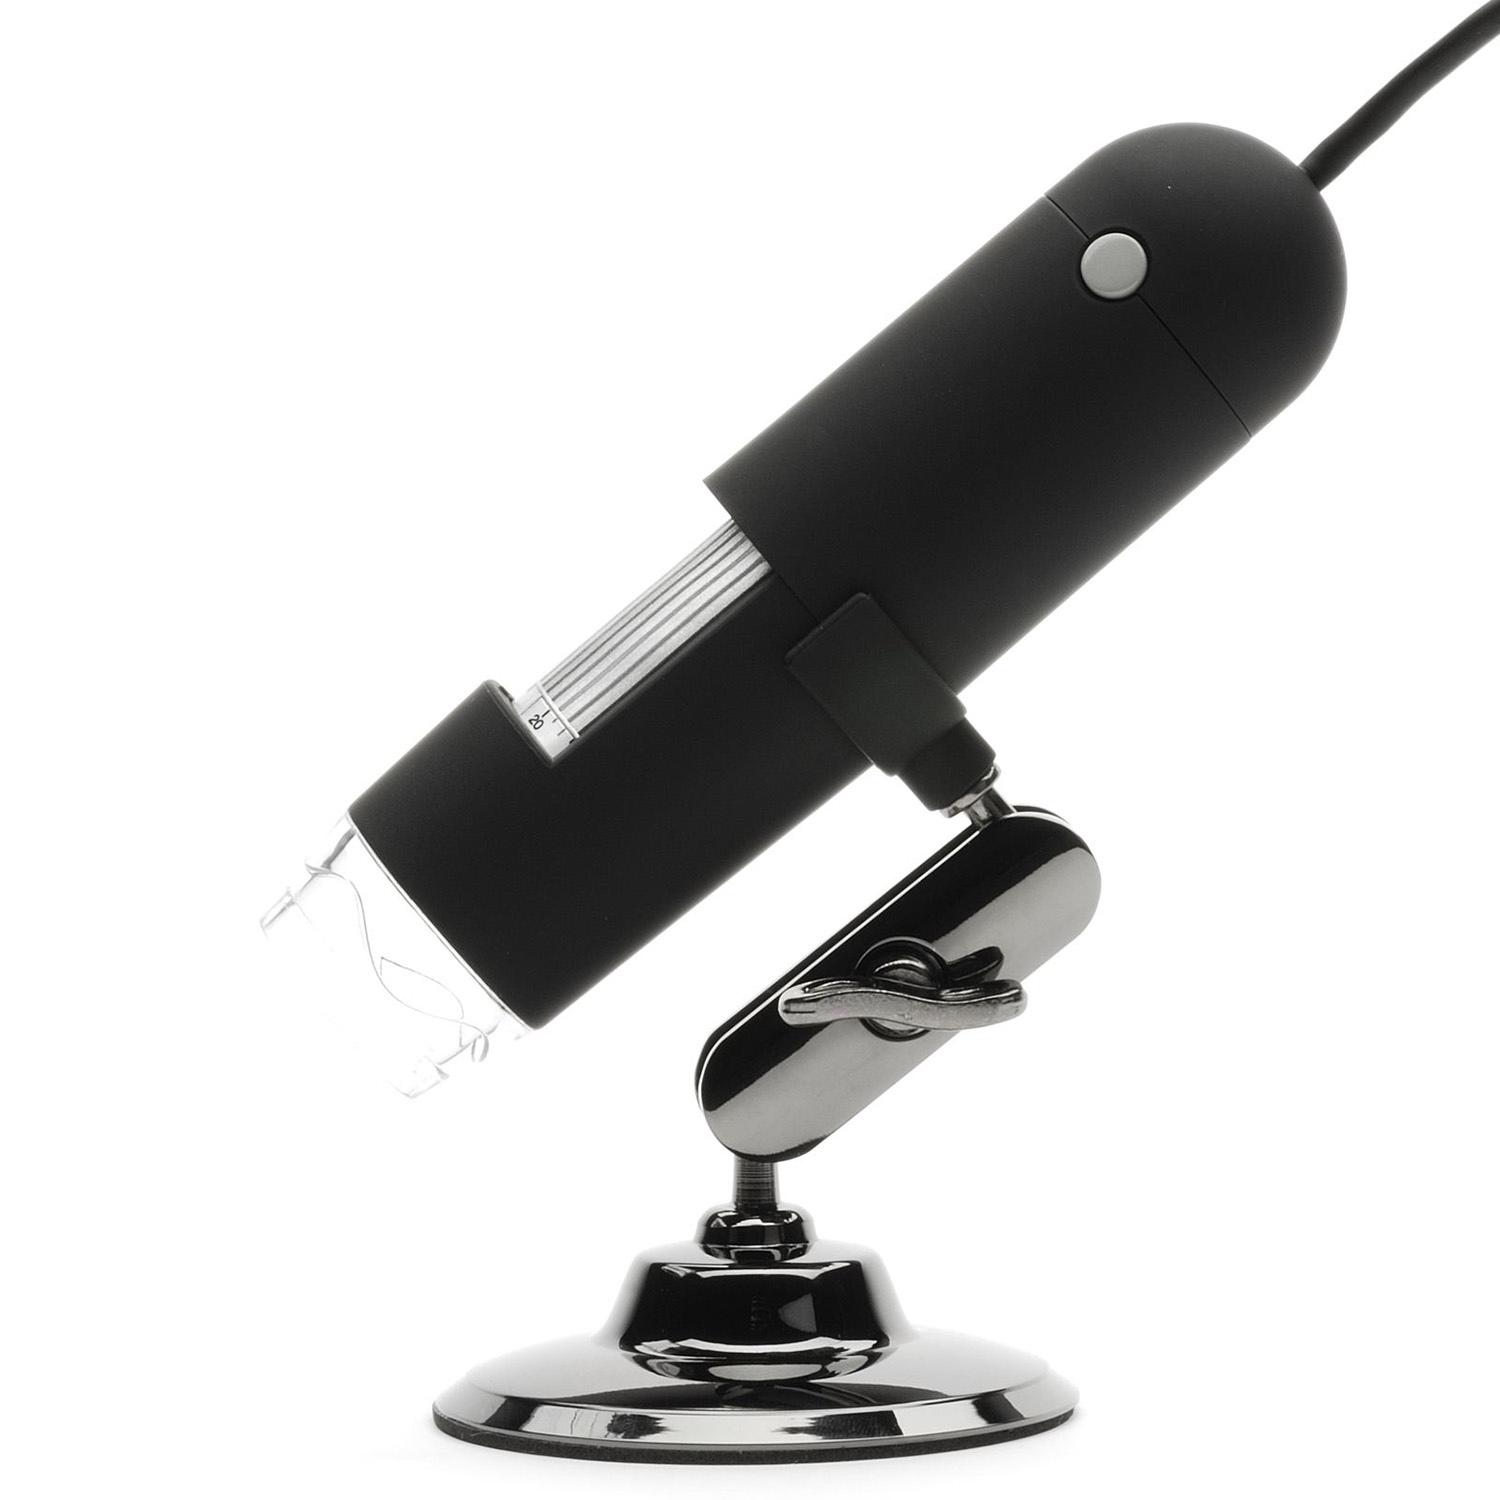 VEHO 200x USB Mikroskop 1,3 Megapixel Objektiv 20 bis 200 fache Vergrößerung